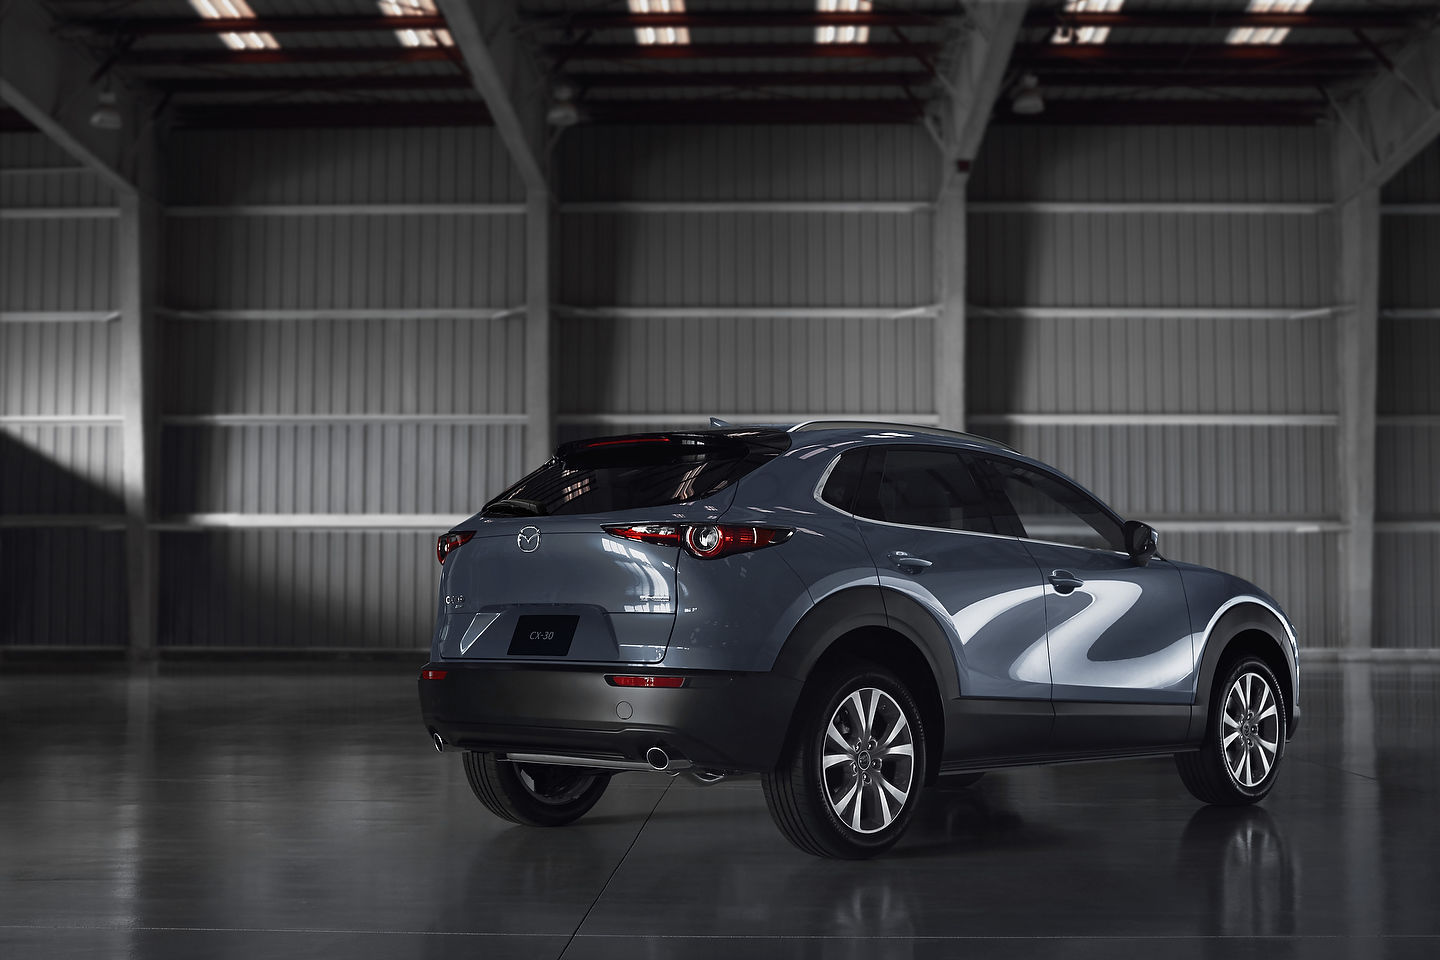 2021 Mazda CX-30 vs 2021 Hyundai Kona: Performance and interior space in the Mazda